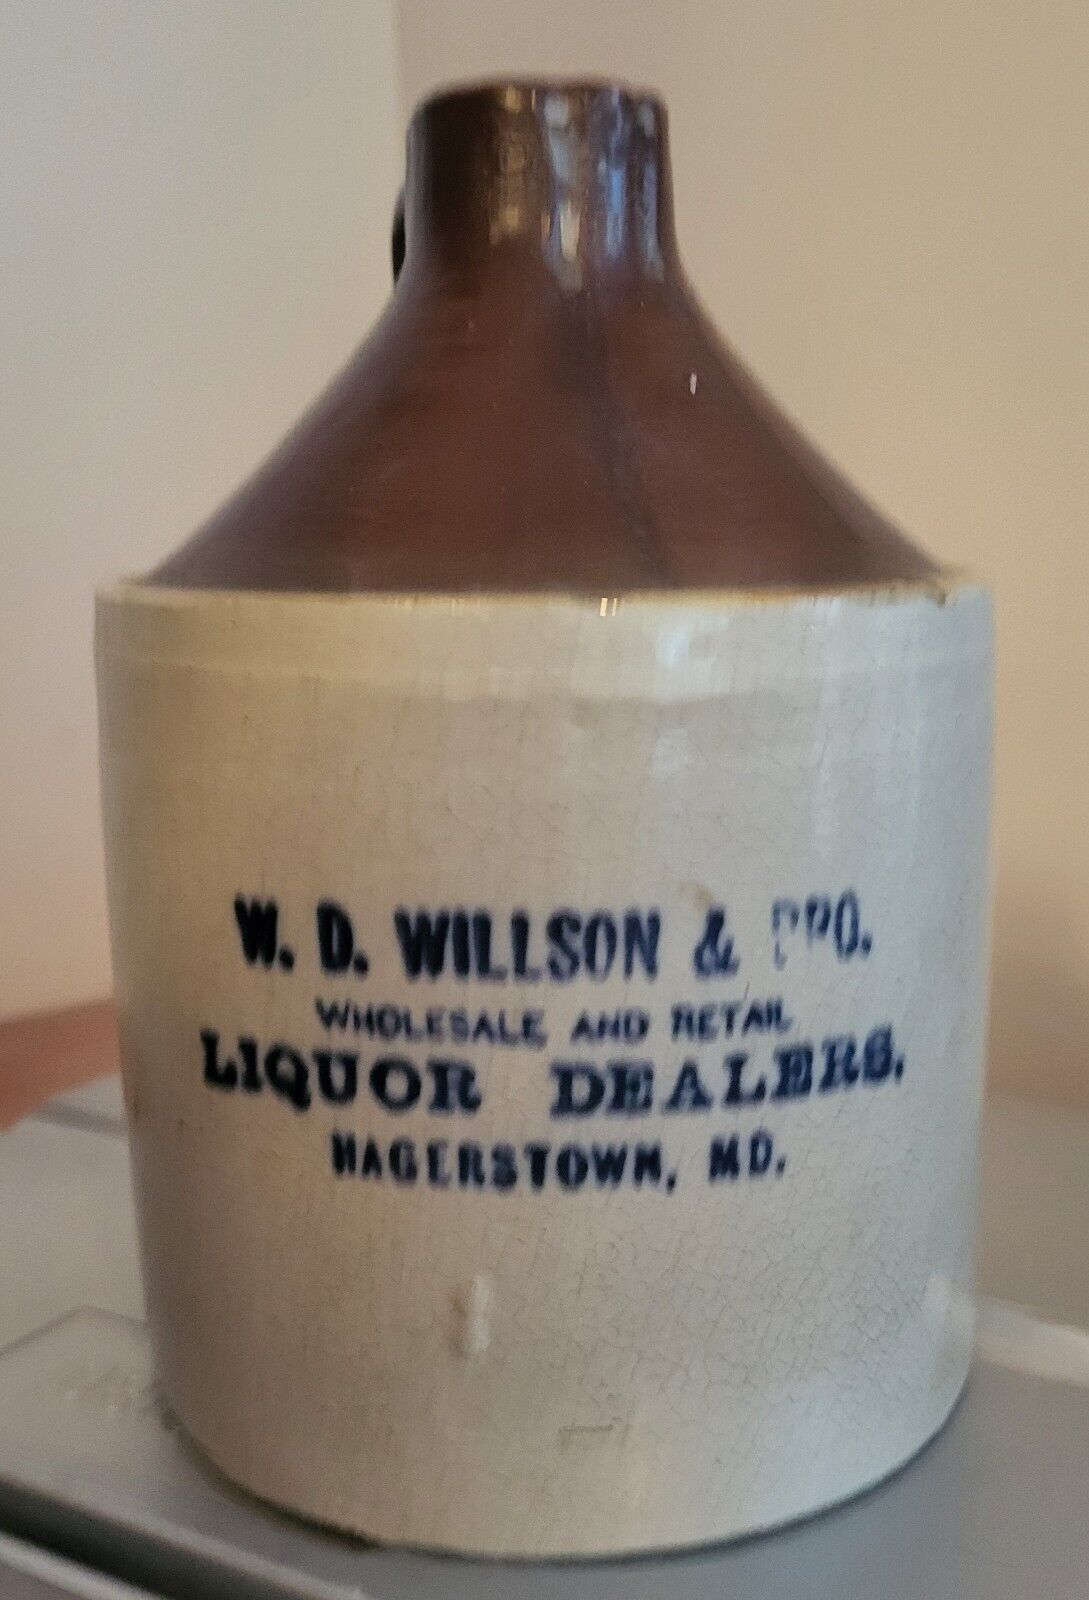 Rare 1890s W. D. Willson & Bro. Liquor Dealers, Hagerstown, MD Jug